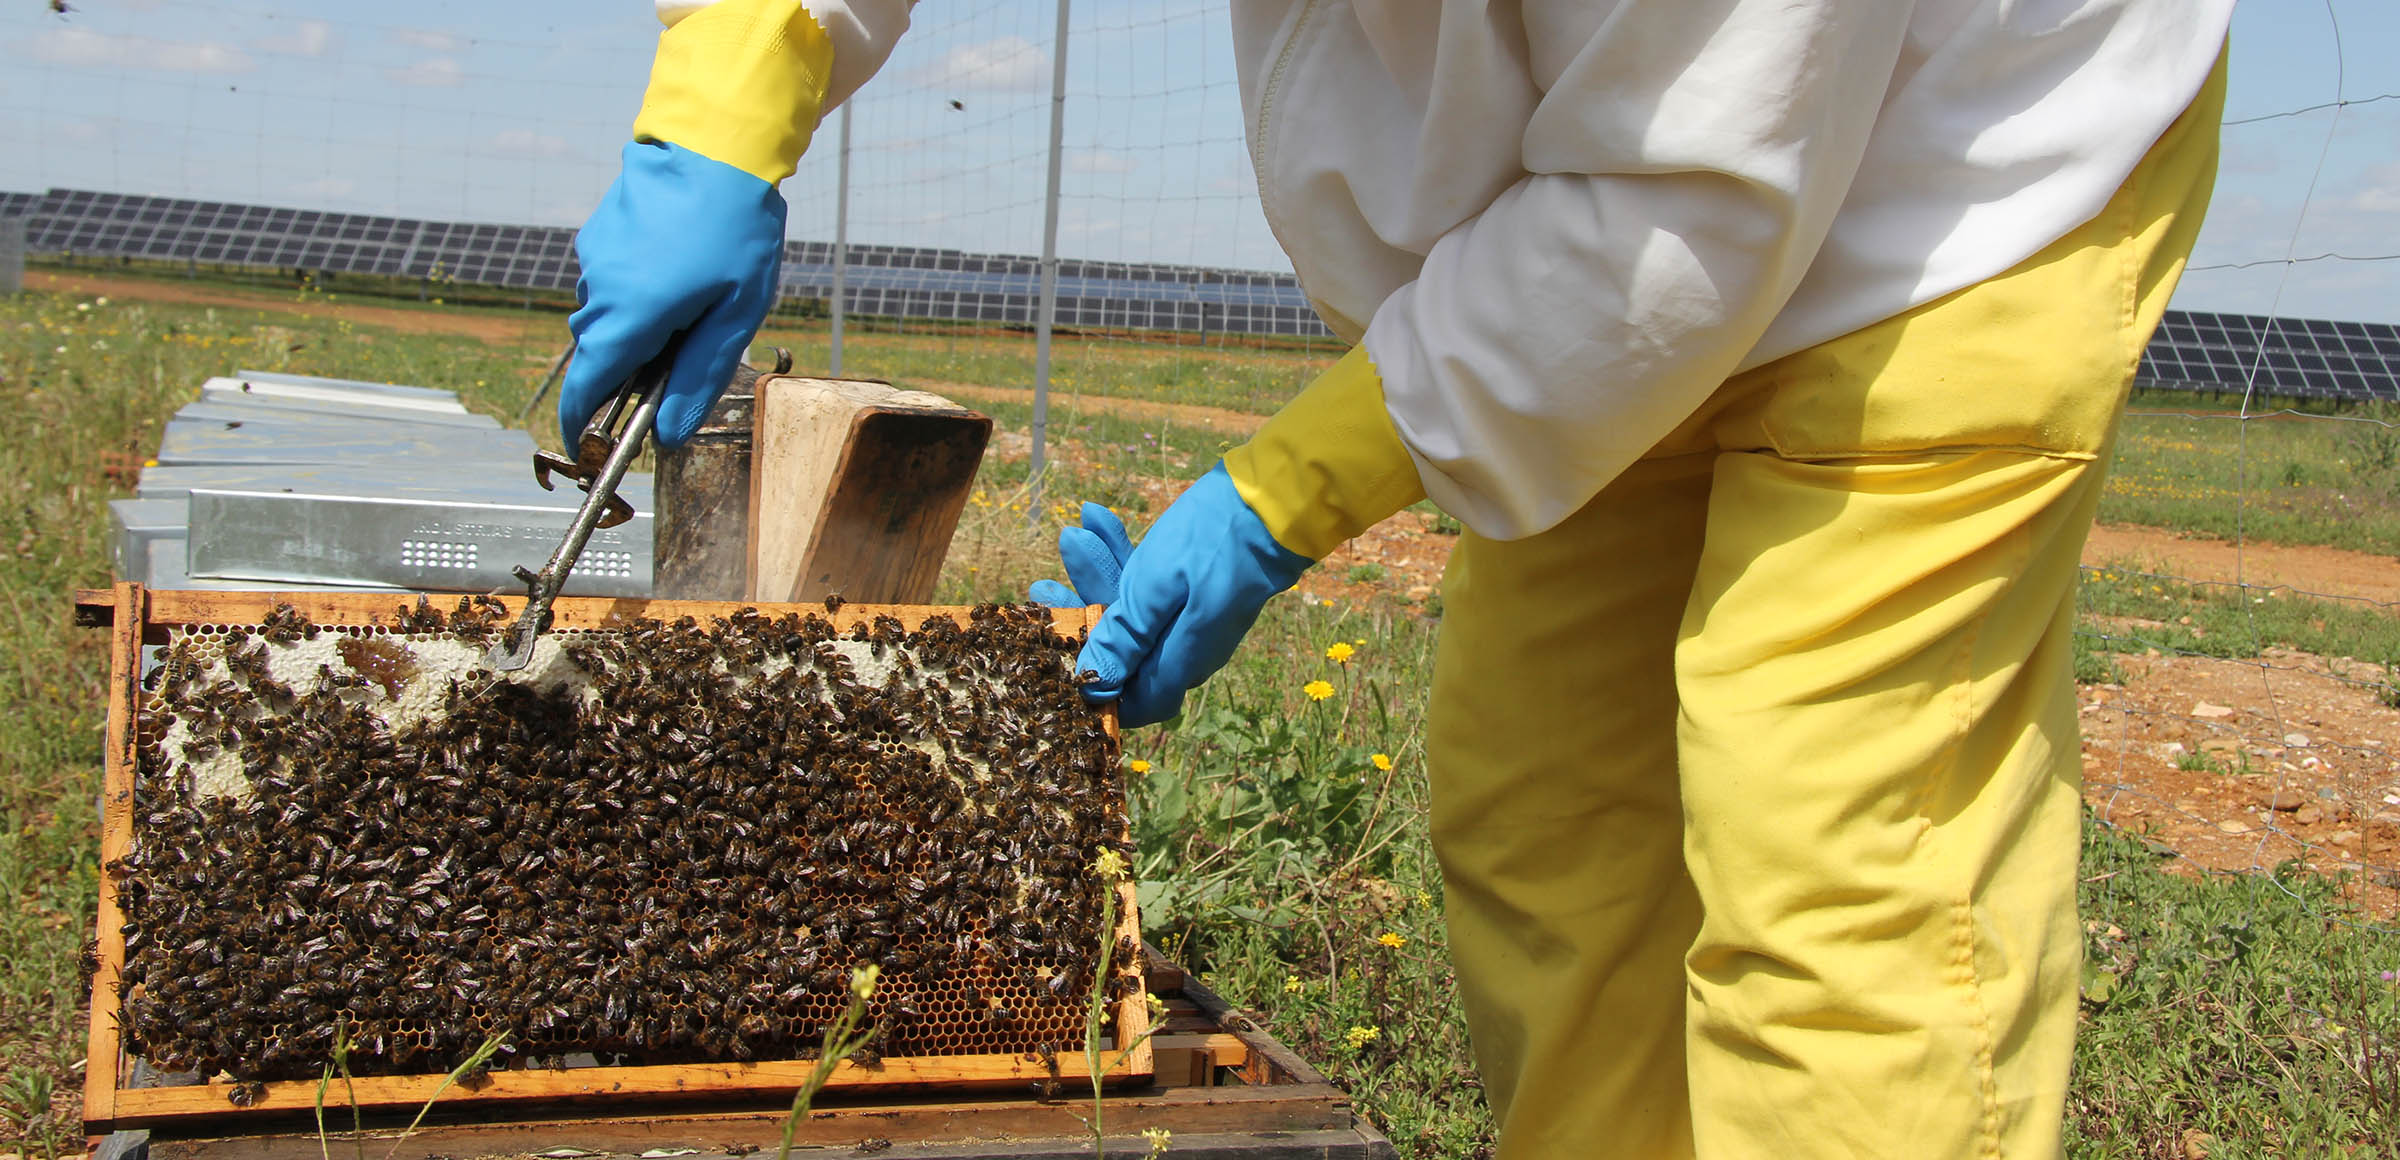 III. Beekeeping Practices that Promote Circular Economy